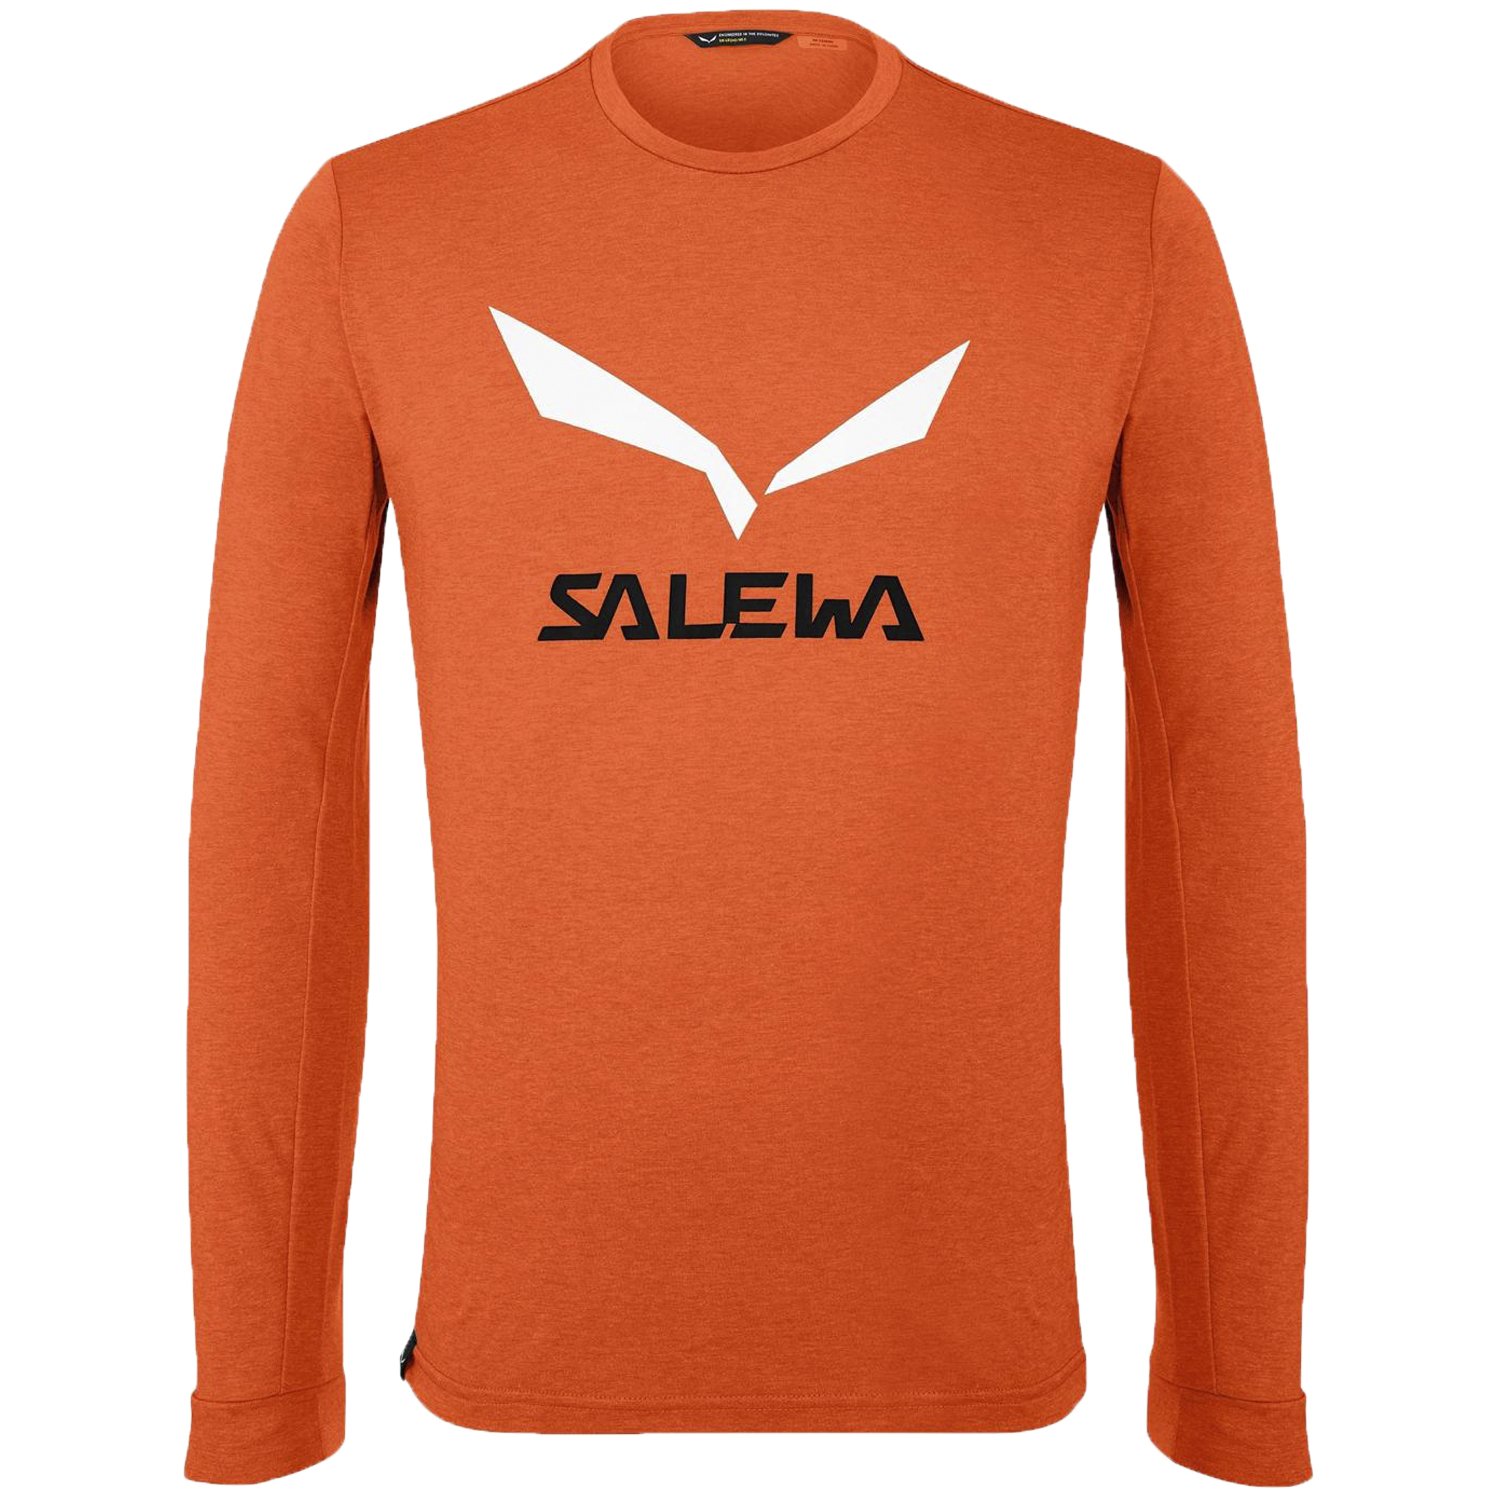 Футболка Salewa Solidlogo Dry Men's L/S Tee Red Orange Melange, с длинным рукавом, мужская, 00-0000027340_4156 mjolk футболка с длинным рукавом лимоны